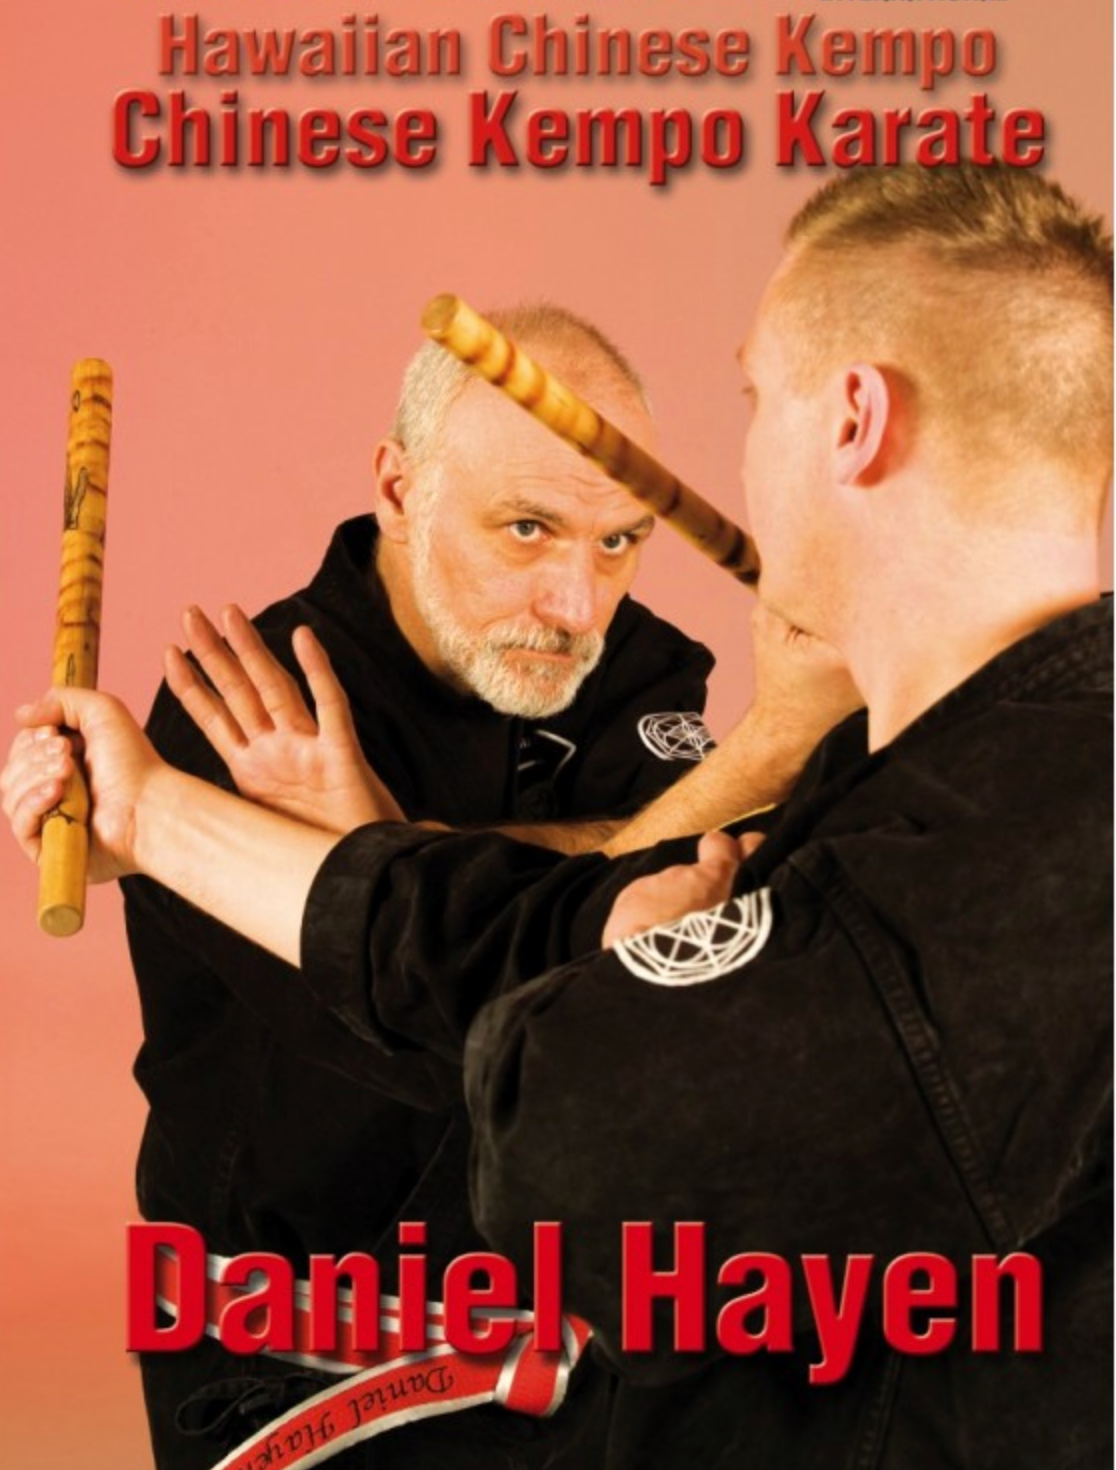 Chinese Kempo Karate DVD by Daniel Hayen - Budovideos Inc